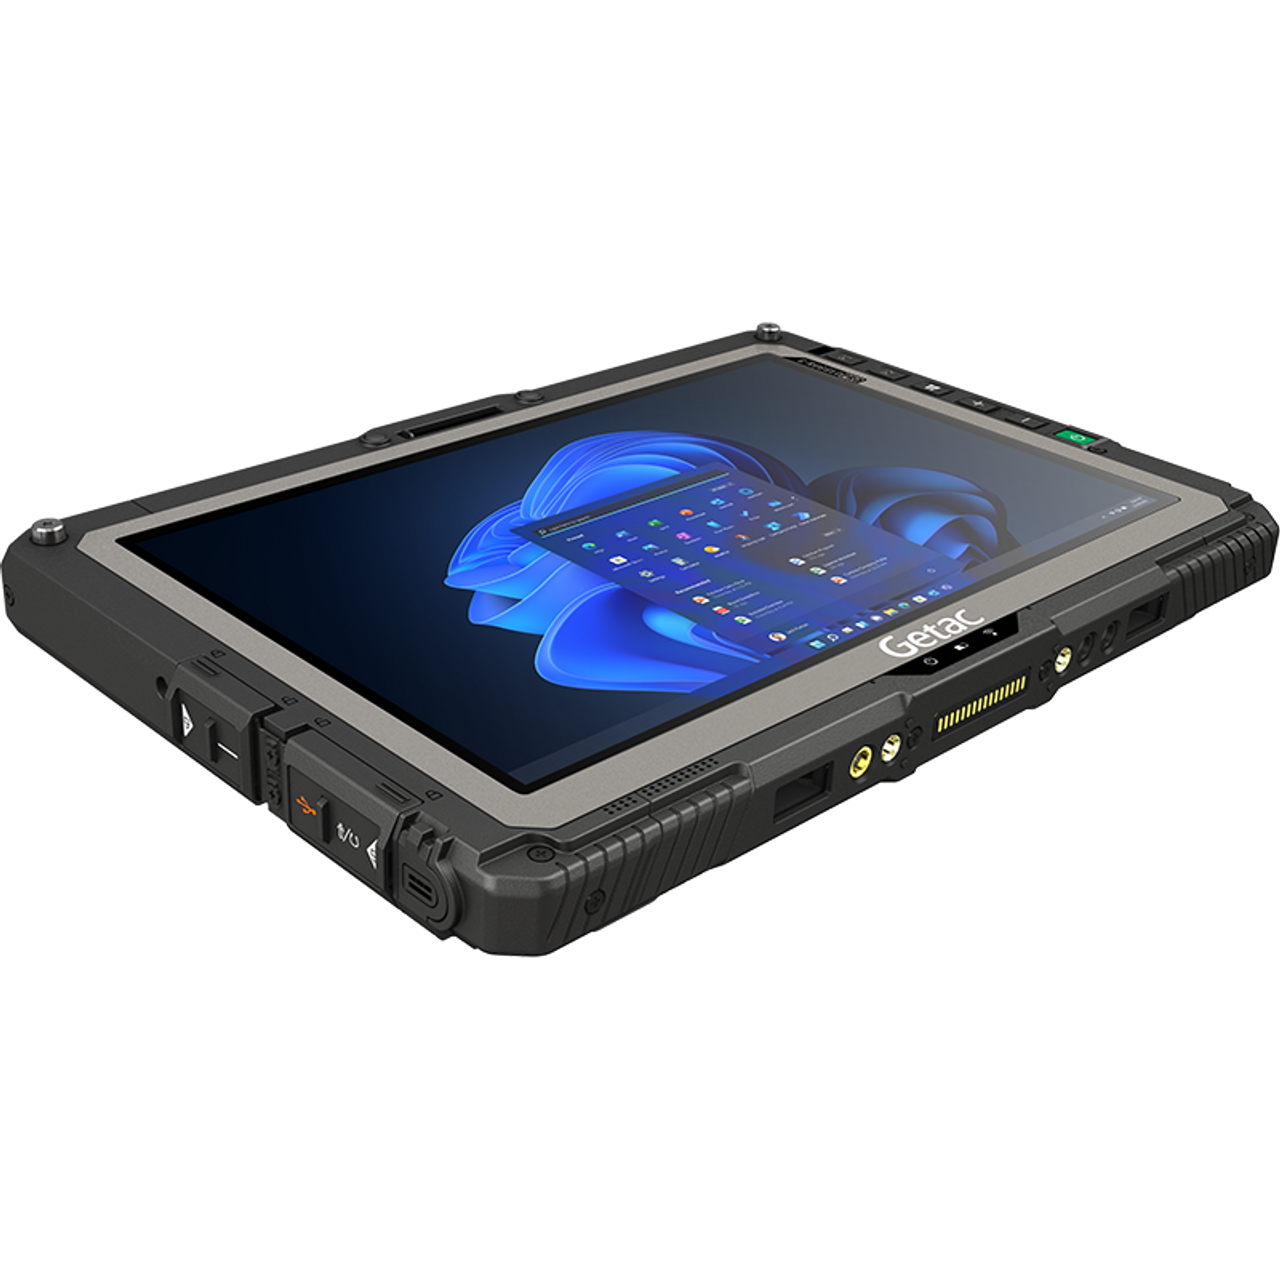 Getac UX10G2-R i5-10210U, Webcam, W 10 Pro x64 with 16GB RAM, 256GB PCIe SSD, SR HD LCD + Touchscreen stylus + Rear Camera, US Power Cord, WIFI+BT+4G LTE (EM7511) w/ GPS, 1D/2D Imager Barcode Reader, 3yb2b.